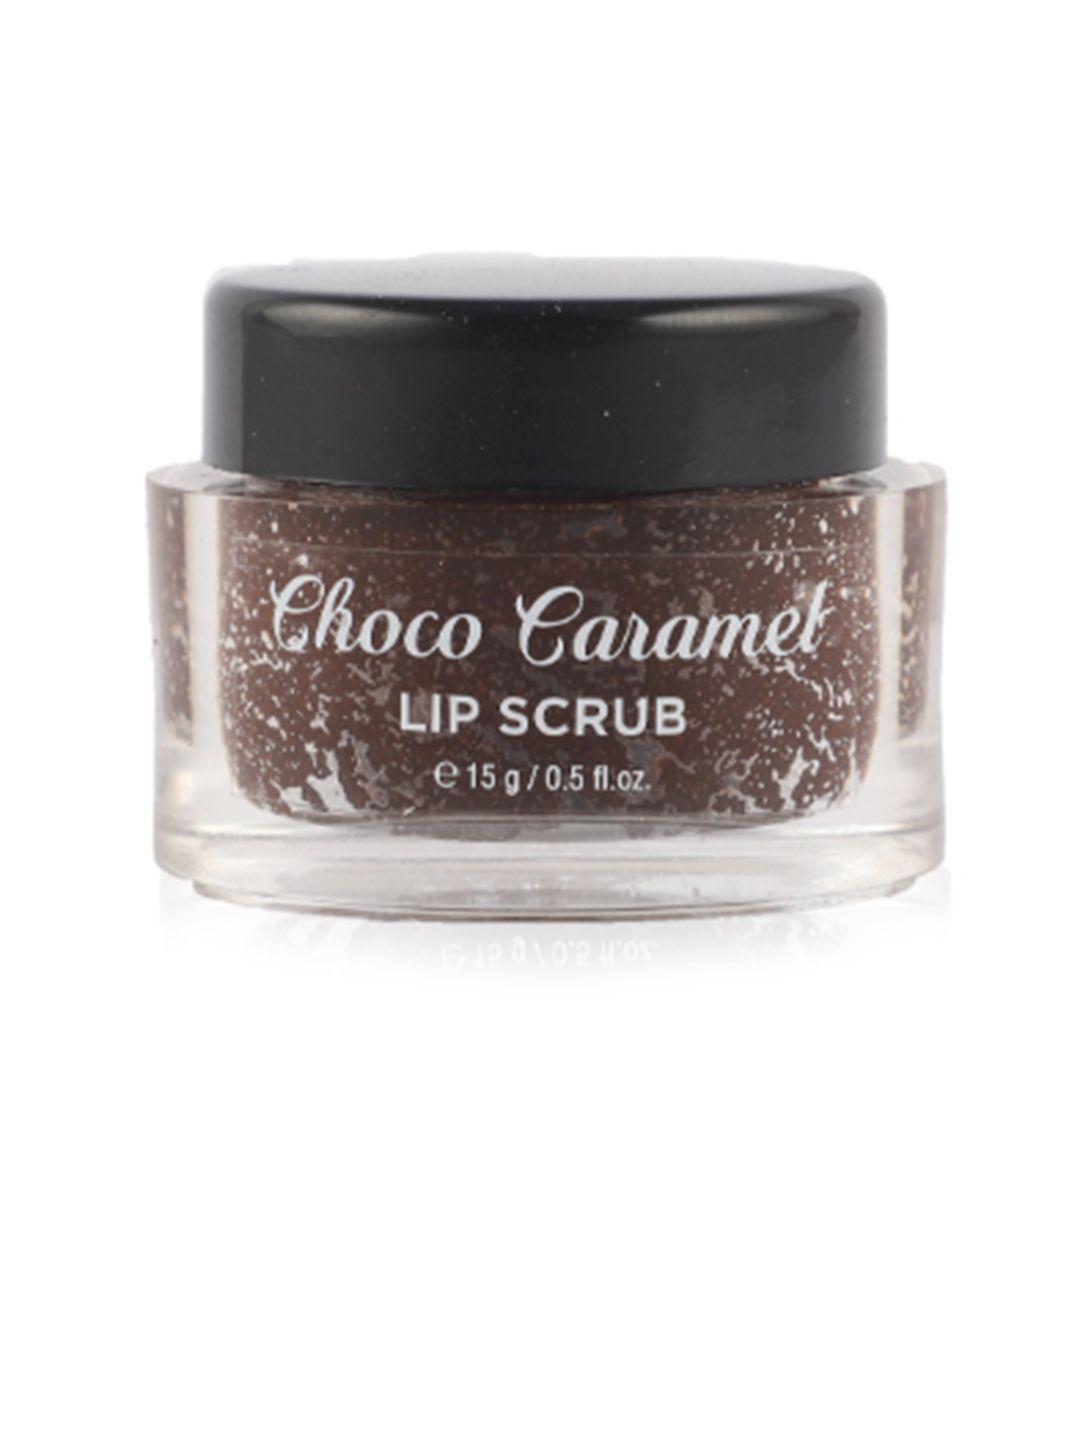 anour choco caramel lip scrub with jojoba oil & shea butter for soft & smooth lips - 15g